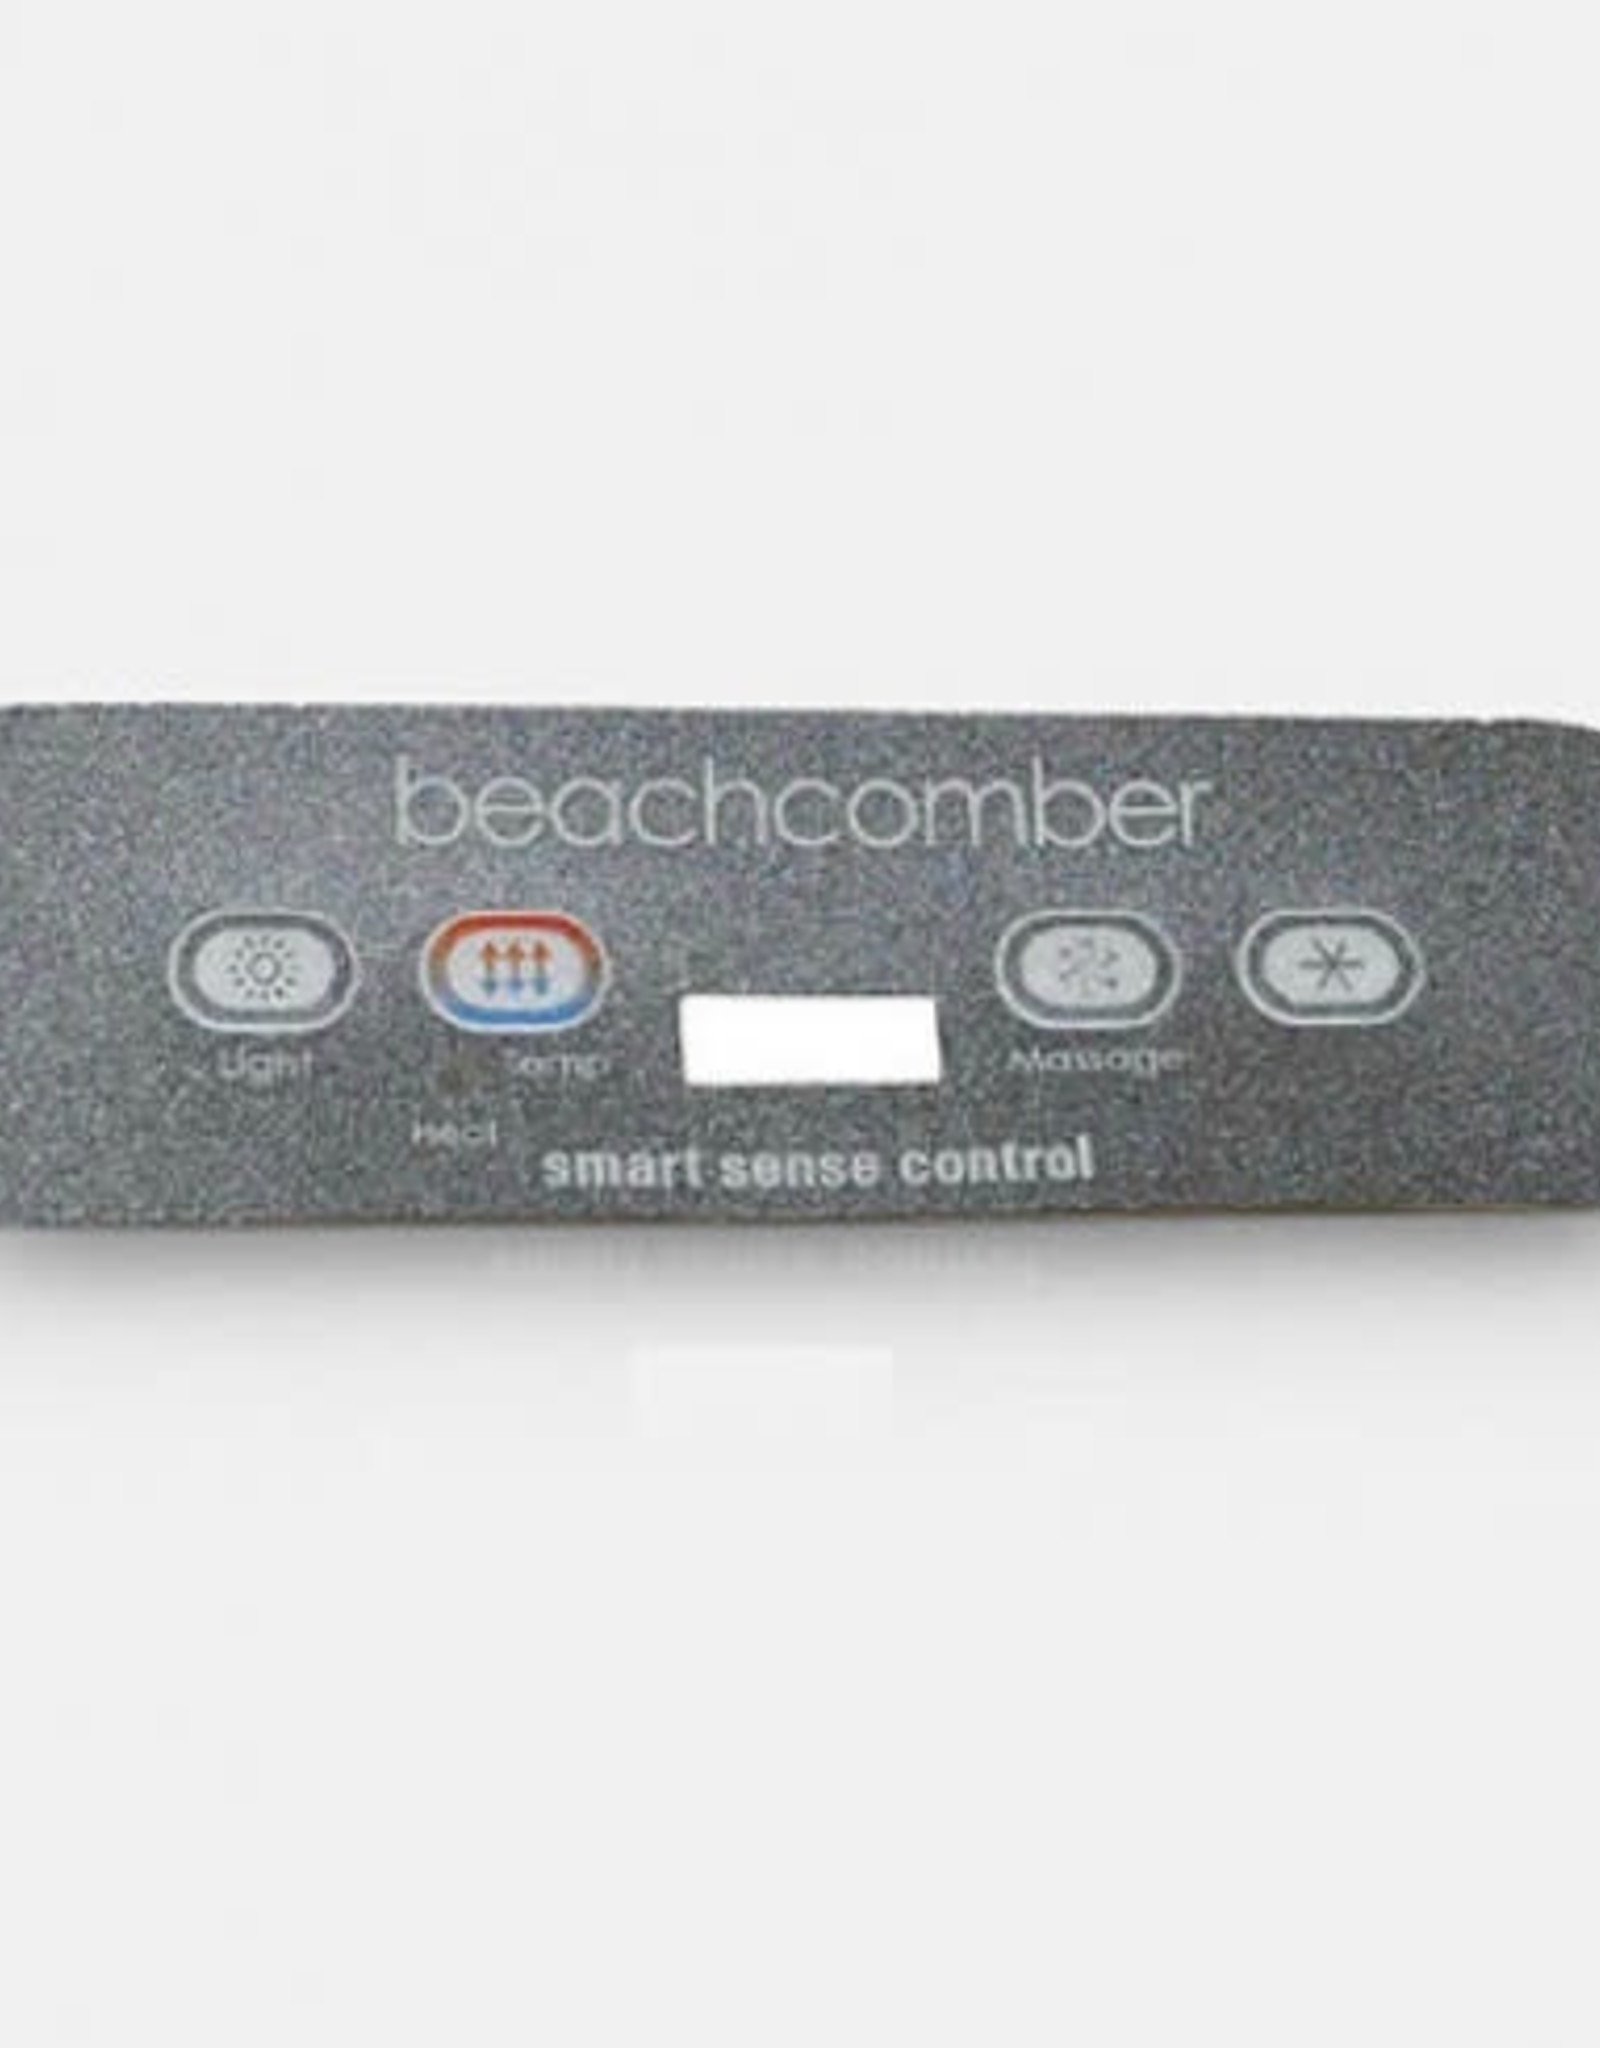 BEACHCOMBER beachcomber overlay for 300 series (2010 to present)